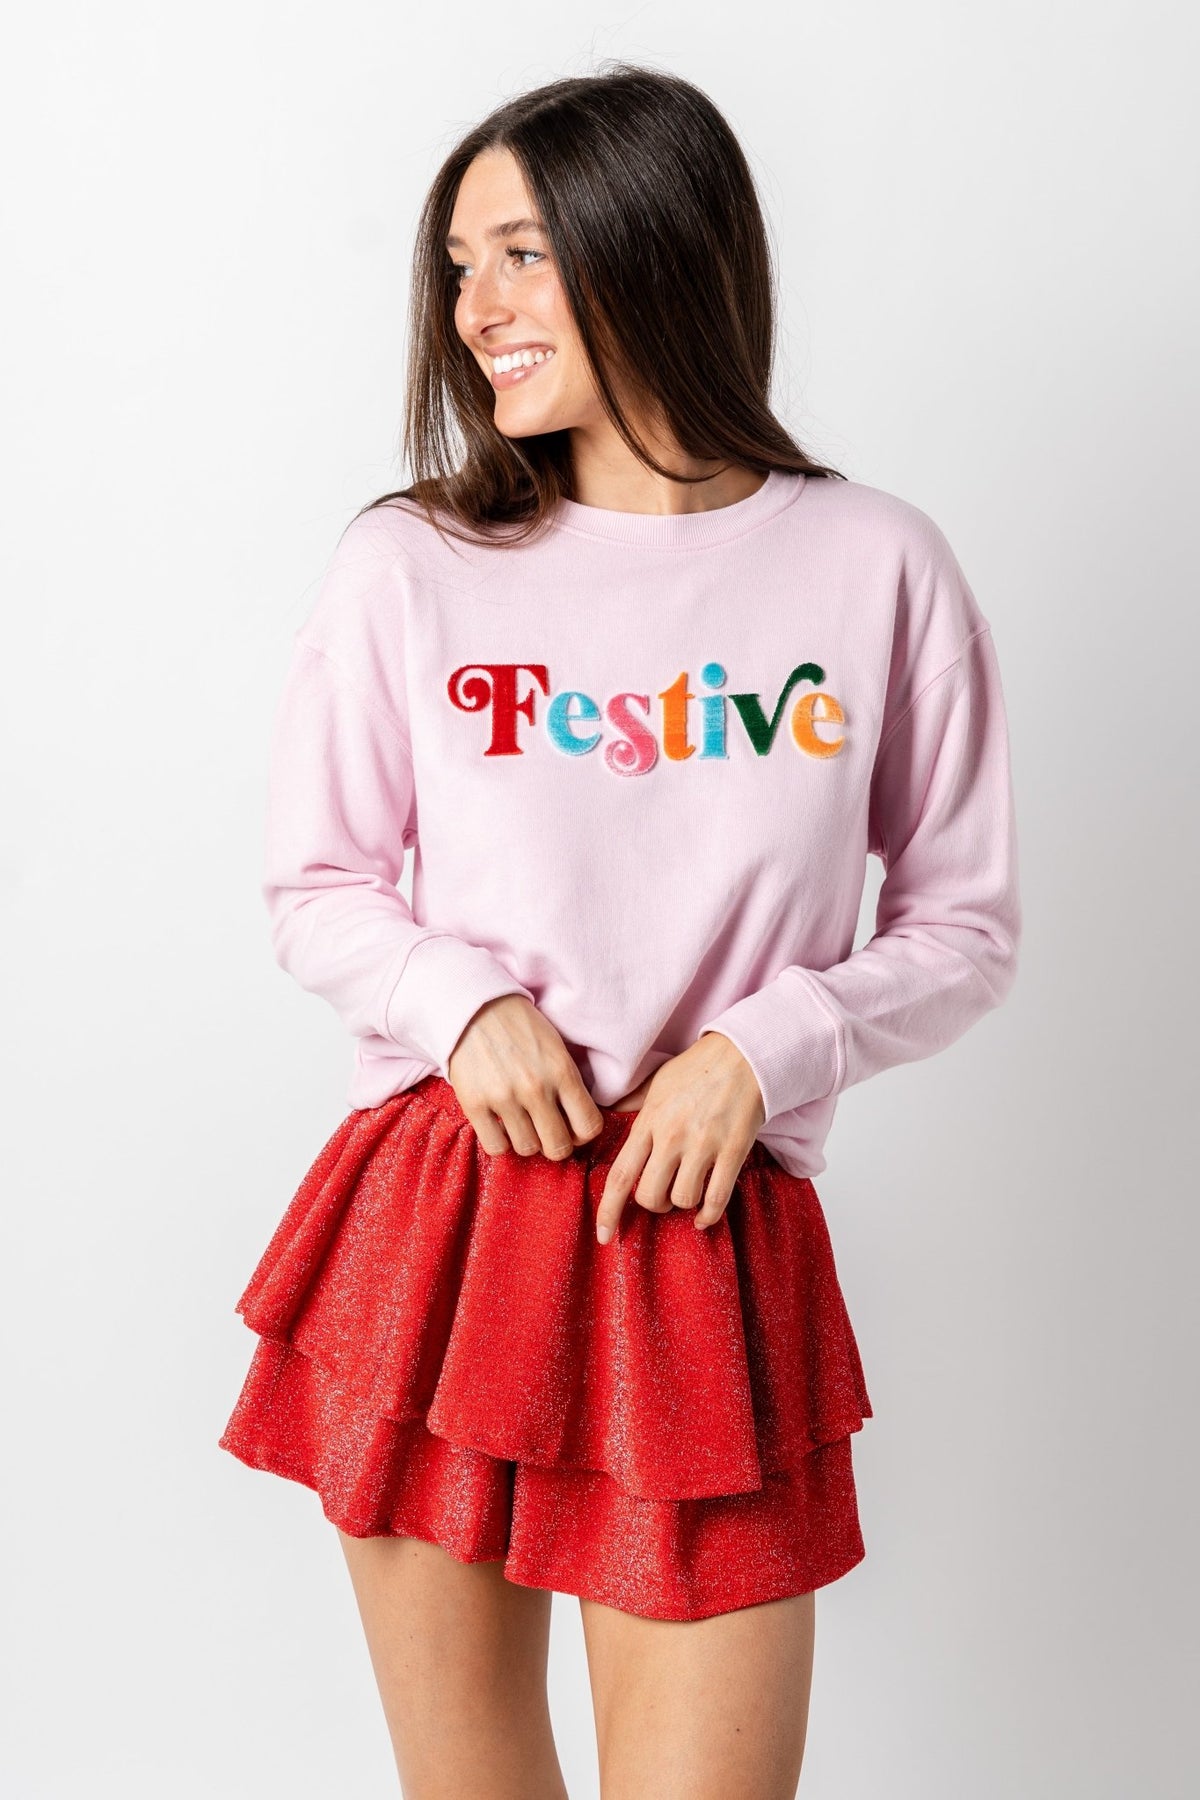 Festive sweatshirt blush - Trendy Holiday Apparel at Lush Fashion Lounge Boutique in Oklahoma City